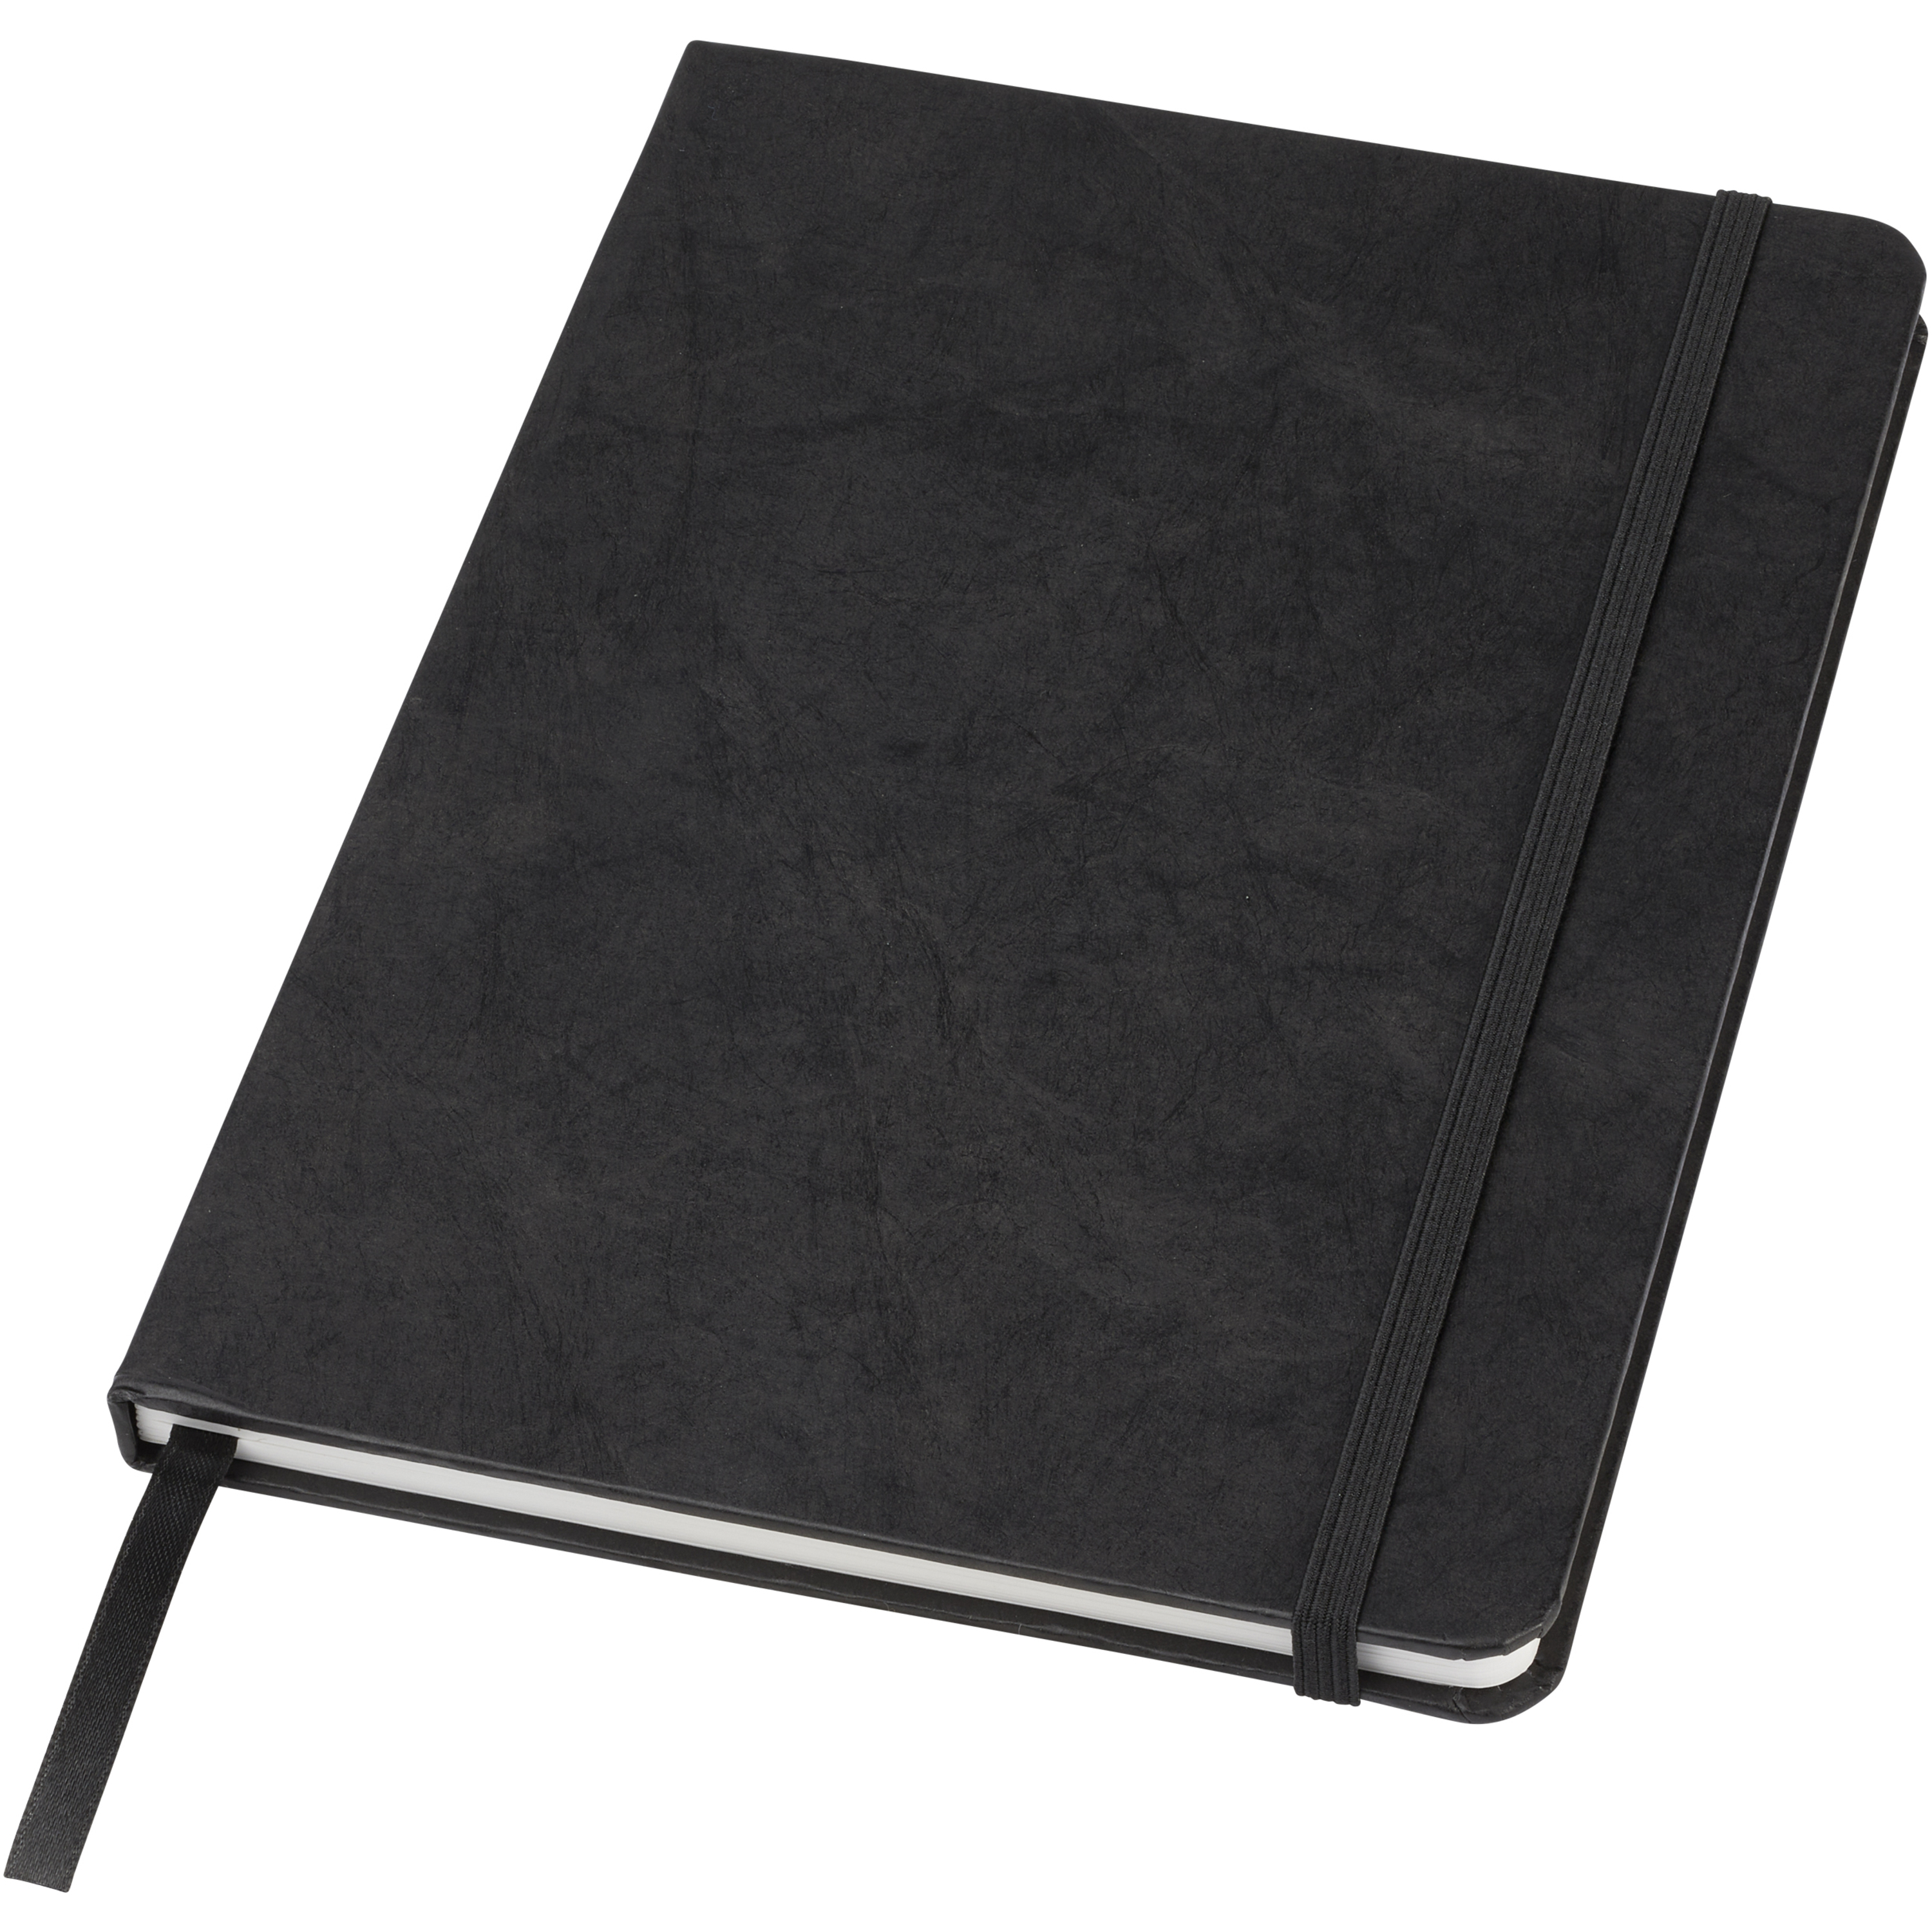 Breccia A5 stone paper notebook